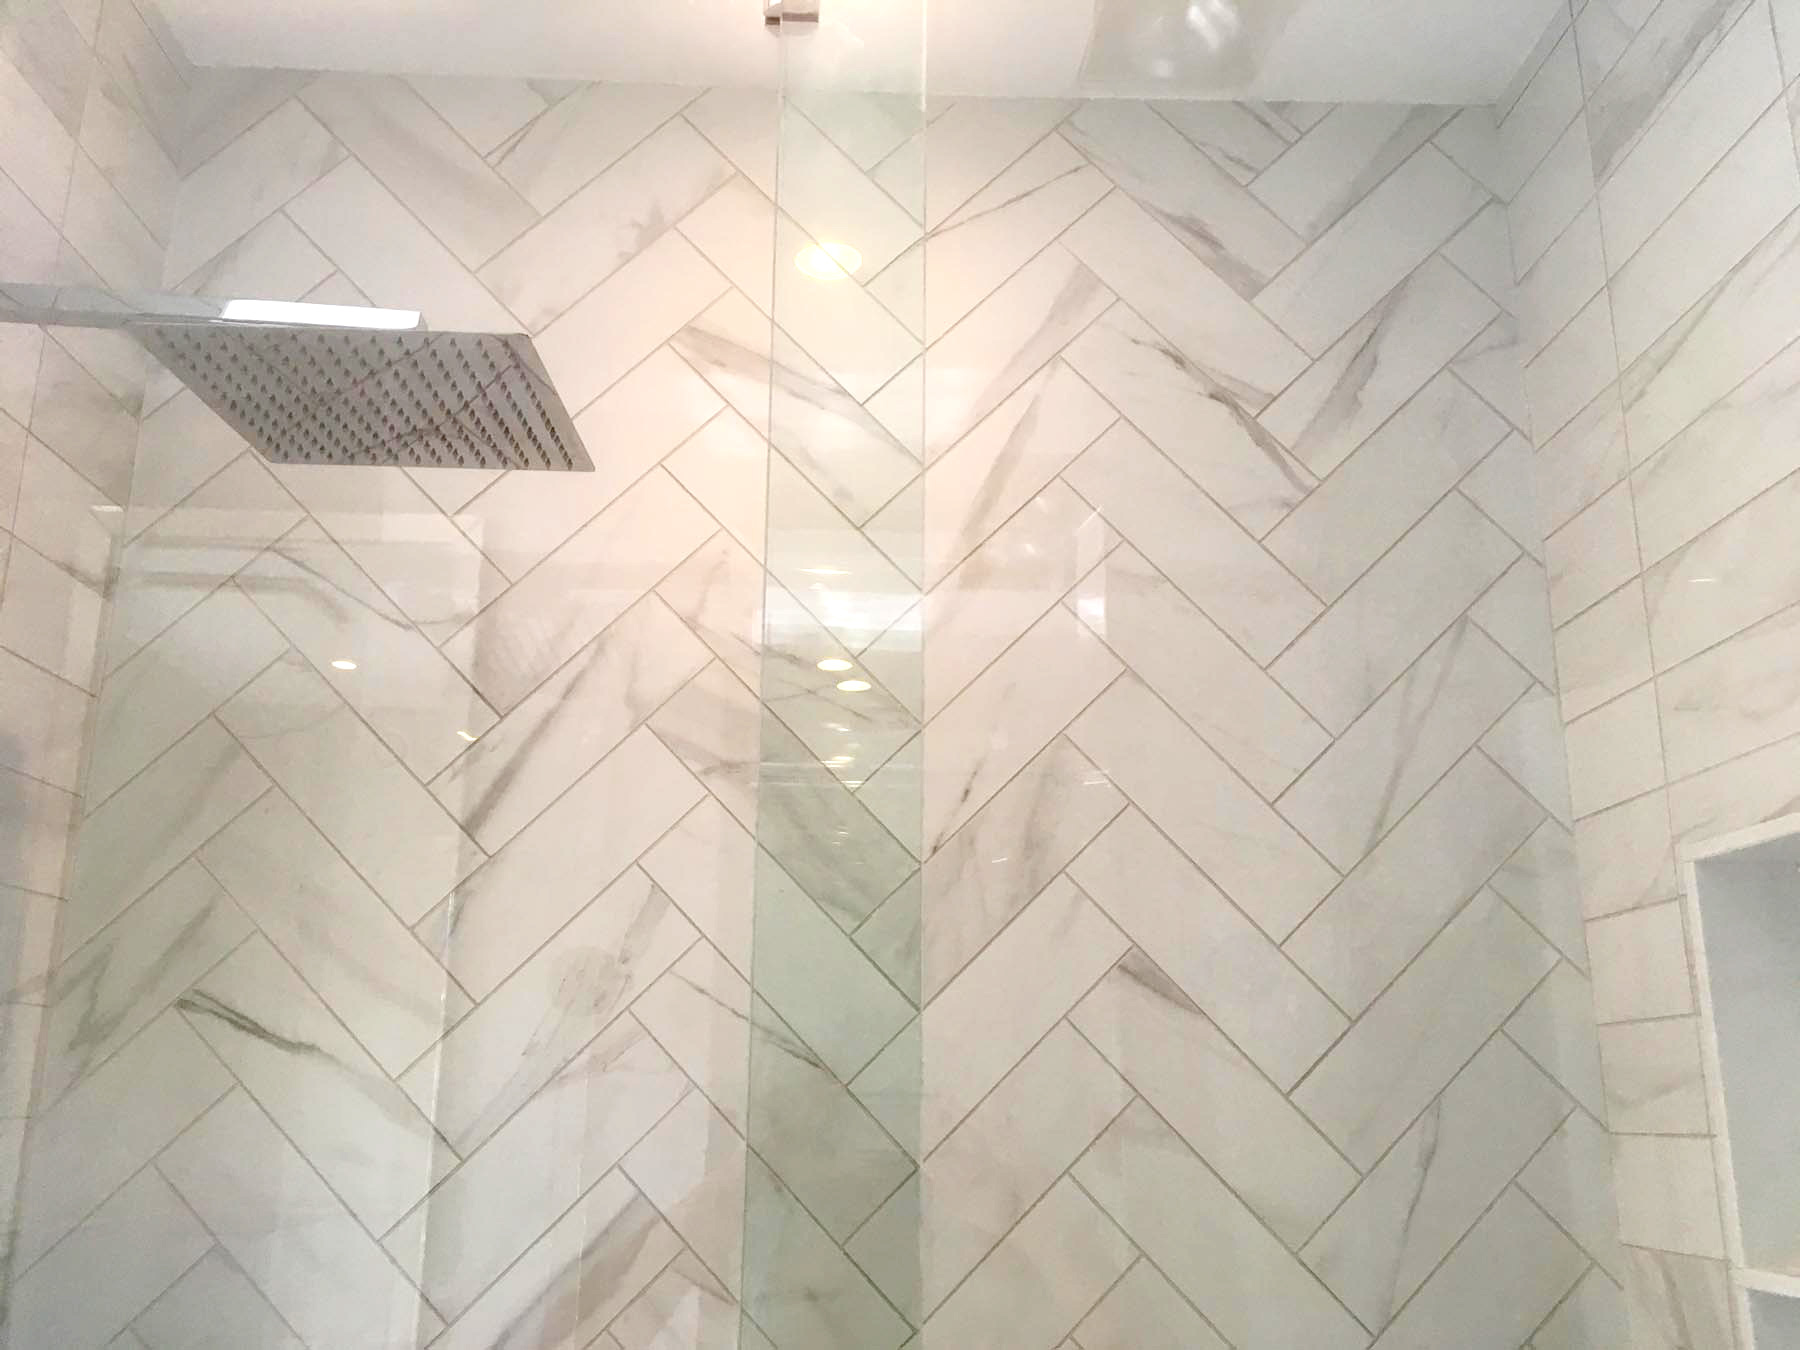 herringbone tile pattern in shower renovation with a rain shower head